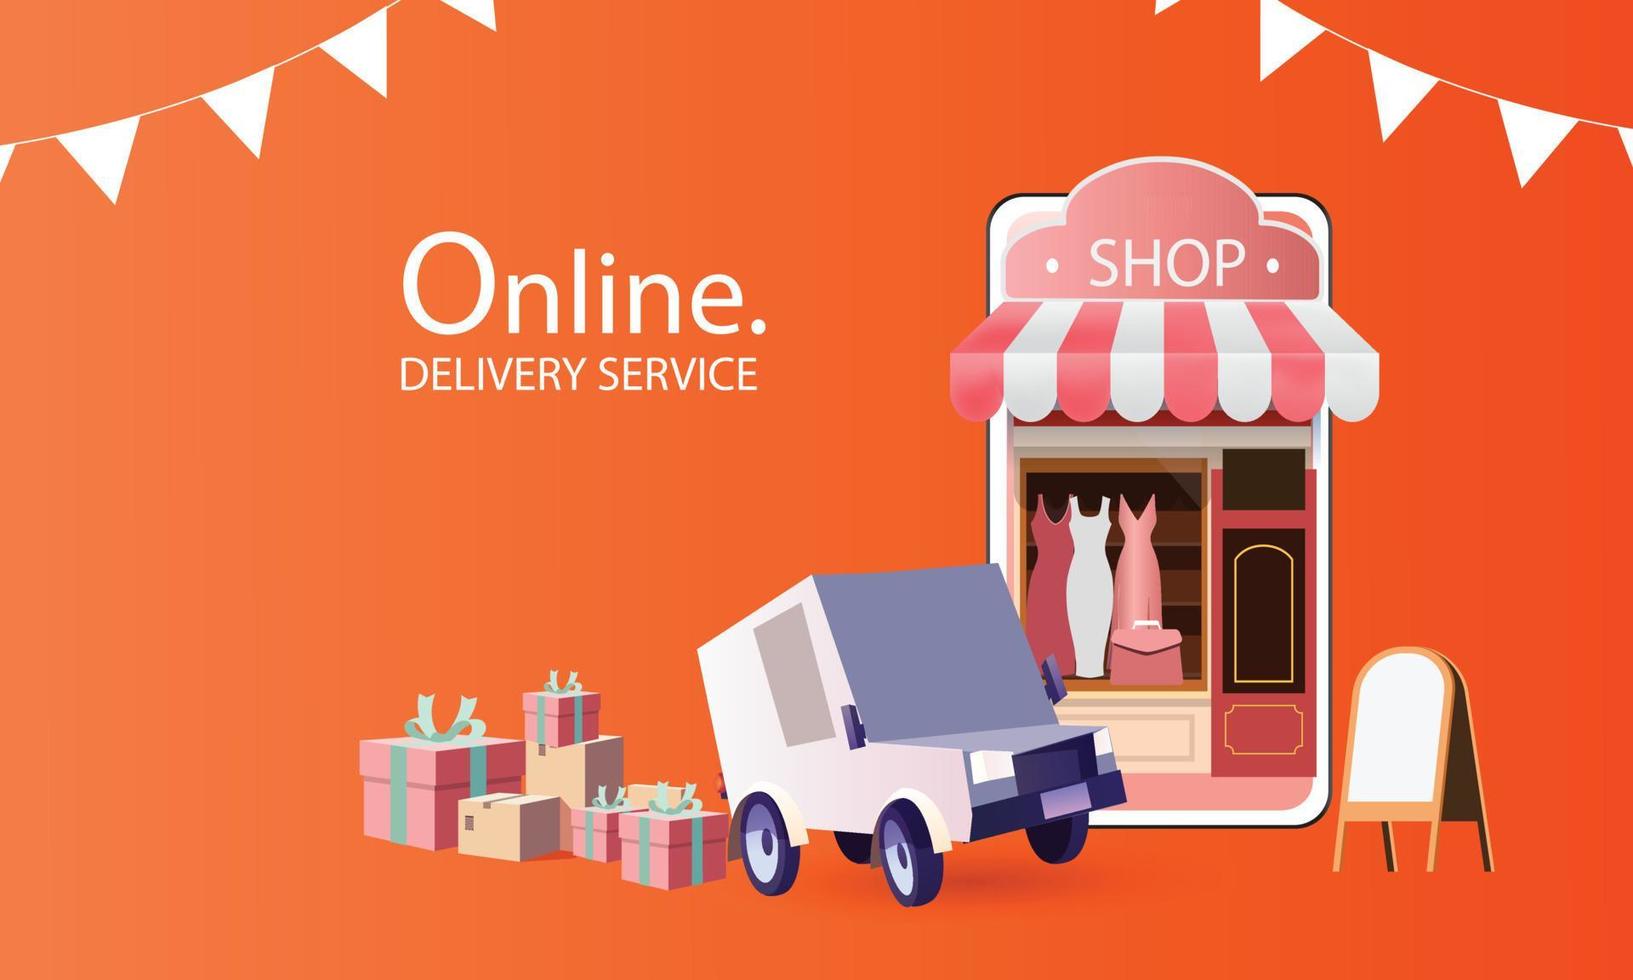 Online-Shopping am Telefon kaufen verkaufen Geschäft digitale Web-Banner-Anwendung Geldwerbung Zahlung E-Commerce-Vektor-Illustration-Suche vektor